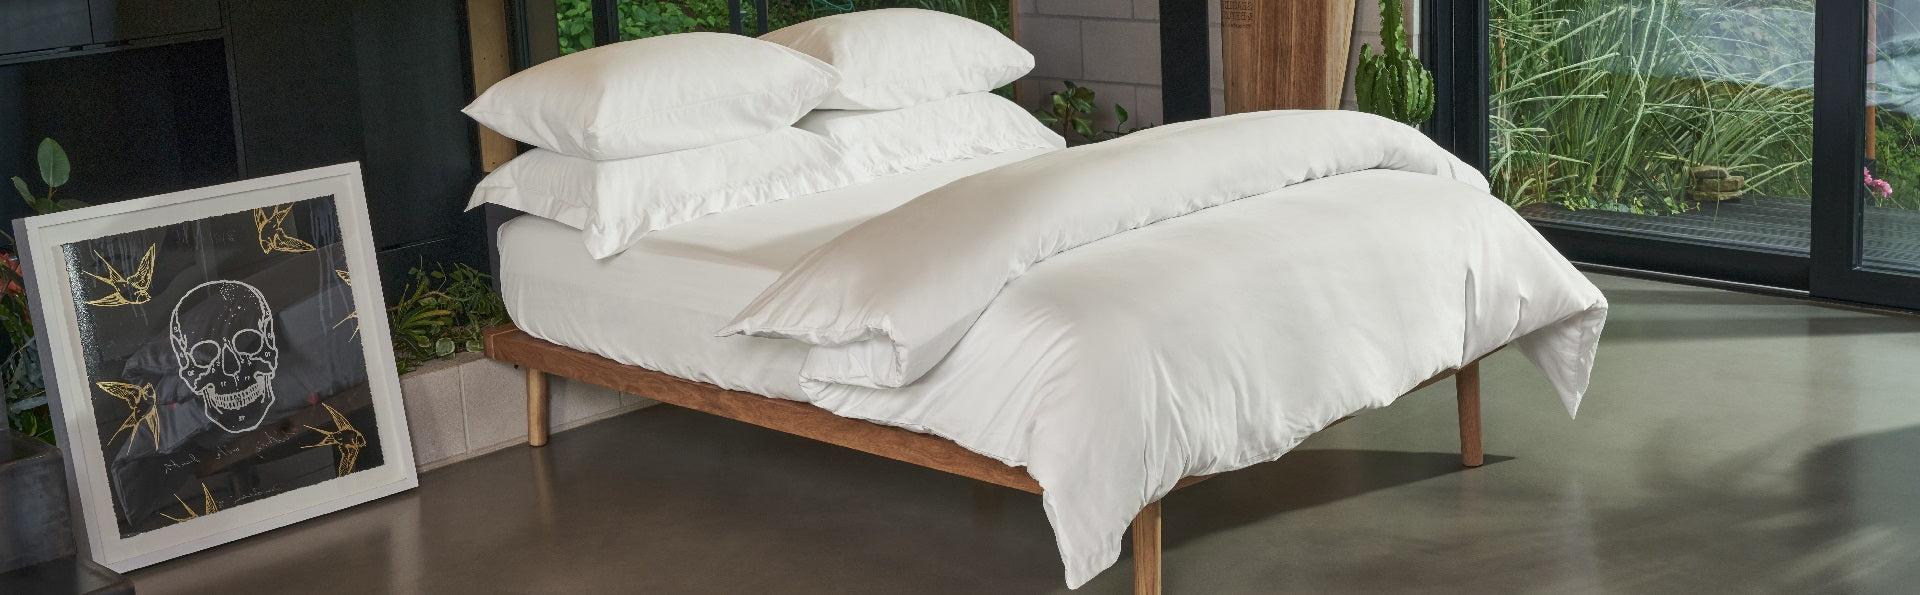 Ikea Bed Linen Sizes Standard European Sizes Linen Cupboard